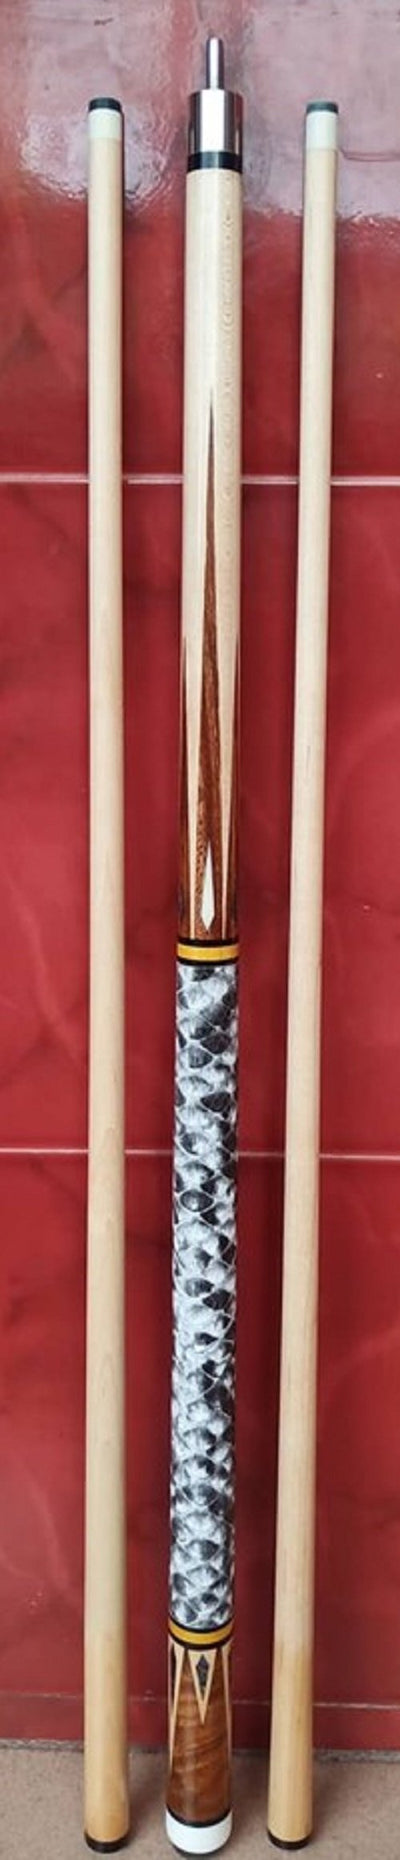 Boriz Billiards Black Leather Grip Pool Cue Stick Majestic Series inlaid G24Z